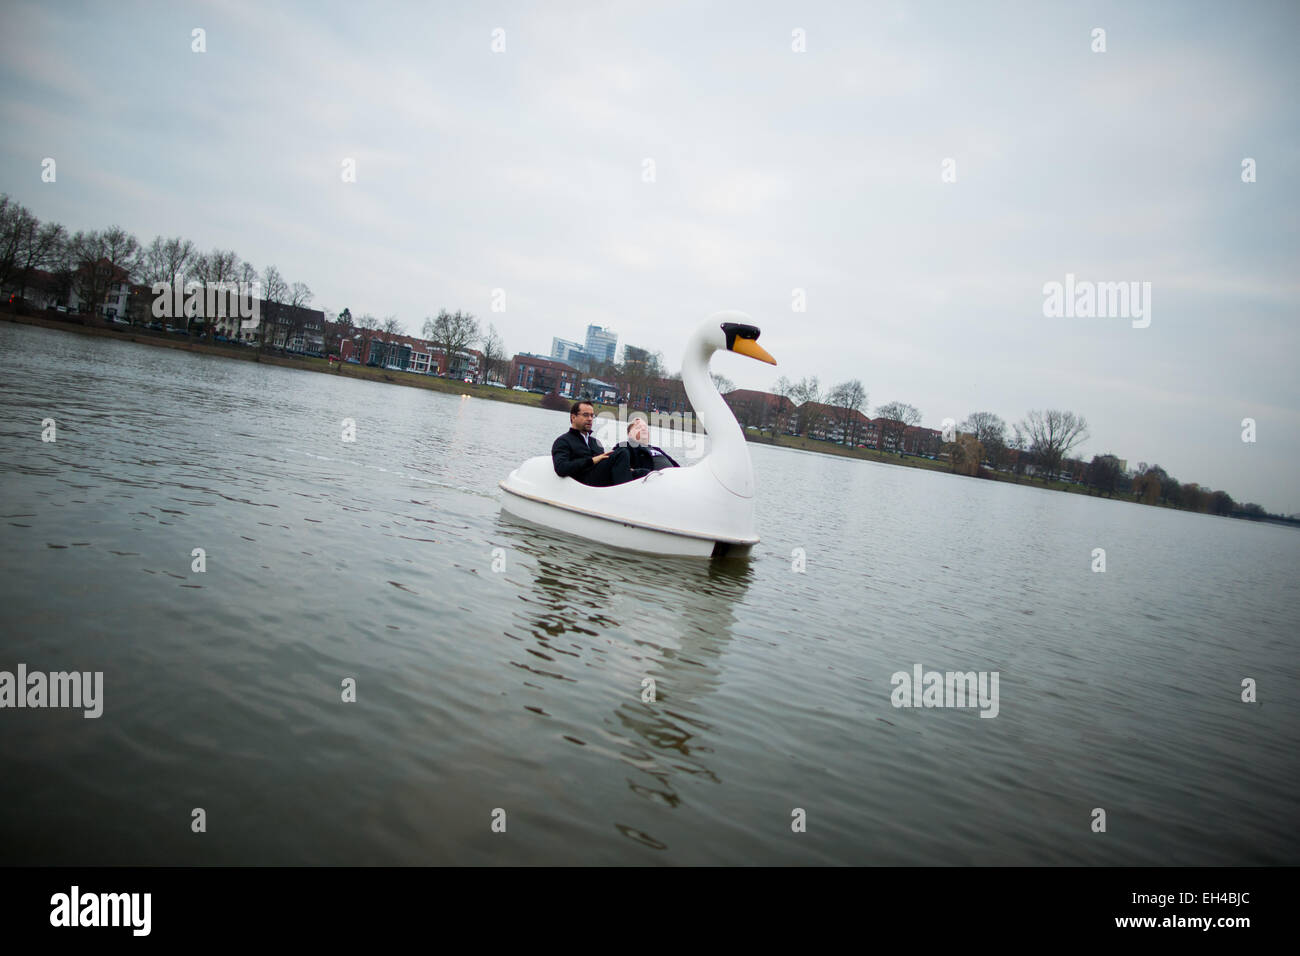 Attori Jan Josef Liefers (l) e Axel Prahl in un peddle barca a forma di cigno durante le riprese per il Muenster-Tatort 'Schwanensee' sul lago Aasee in Muenster, Germania. Foto: ROLF VENNENBERND/dpa Foto Stock